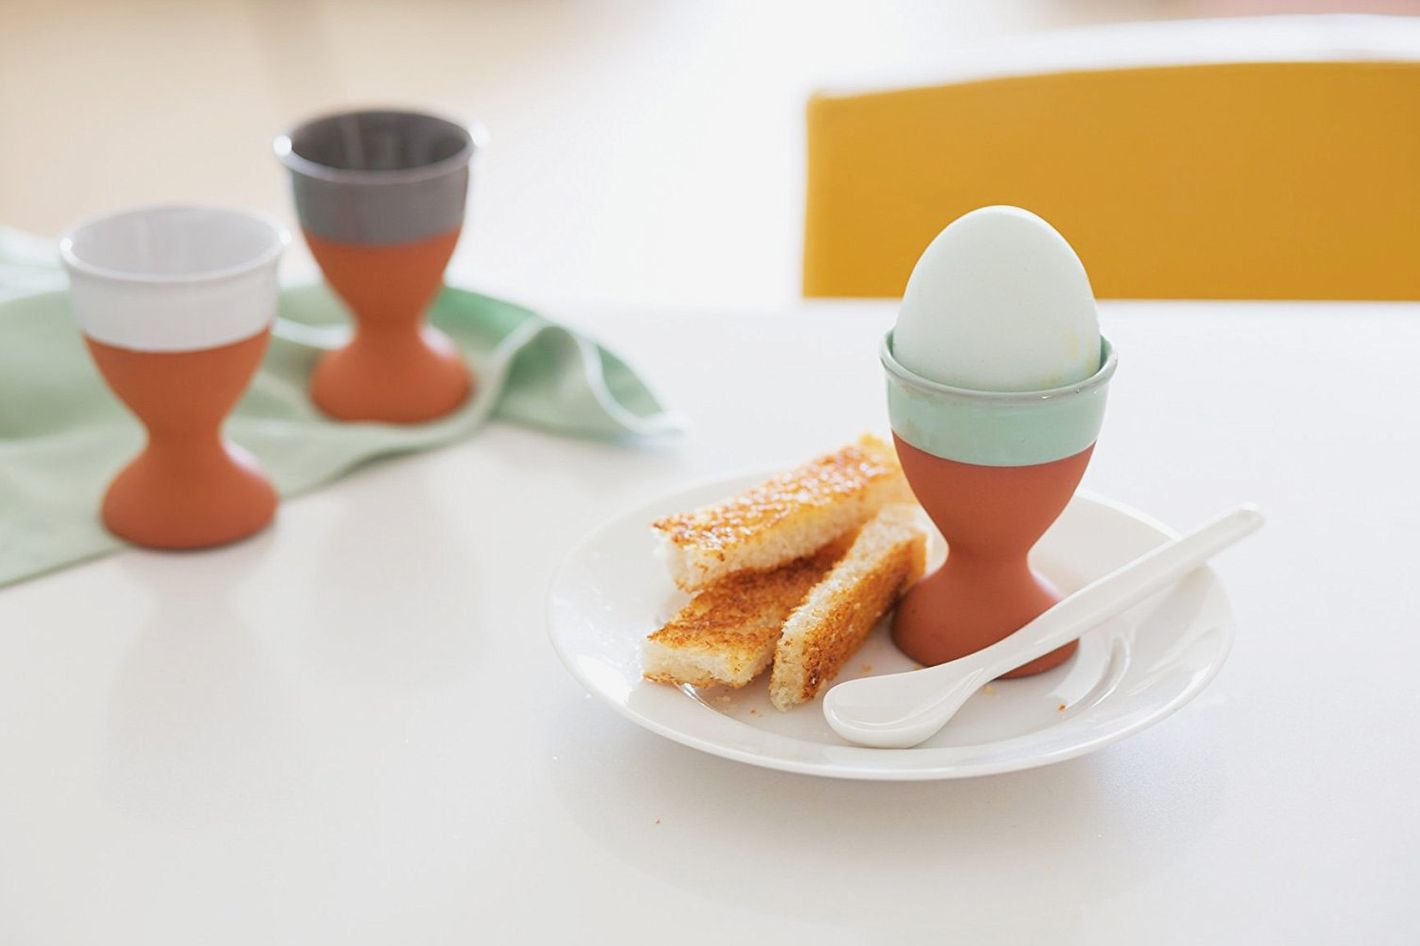 1, Black Cat Egg Holder for Soft Boiled Eggs,Egg Cup Holder Stand,Egg Cute Carton Holder,Ceramic Egg Cup,Novelty Collectable Breakfast Table Kitchenware 